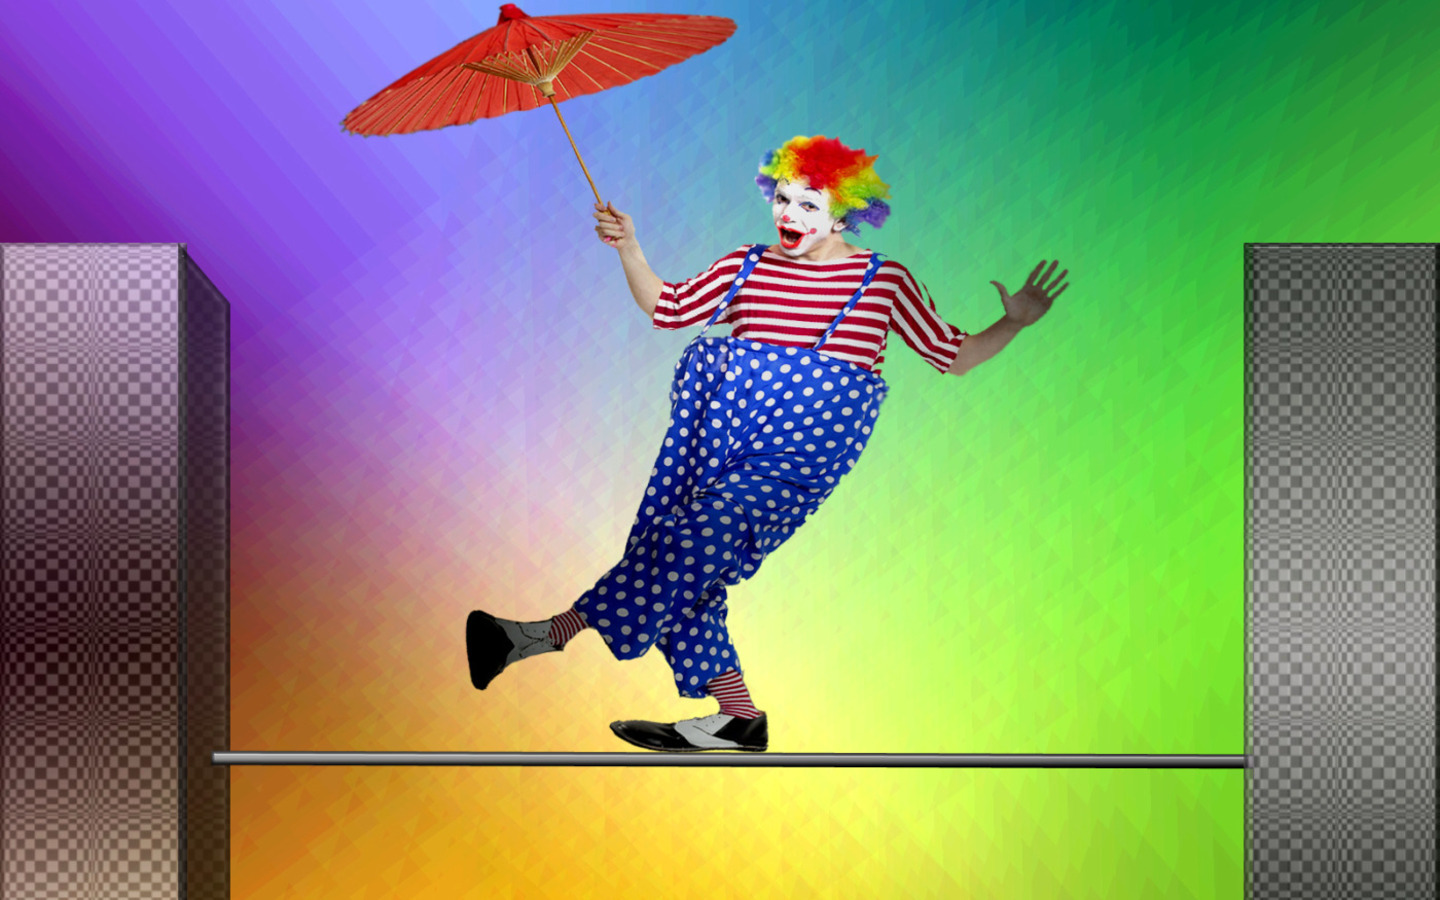 Circus Clown - Circus and Carnivals Wallpaper (20358642) - Fanpop